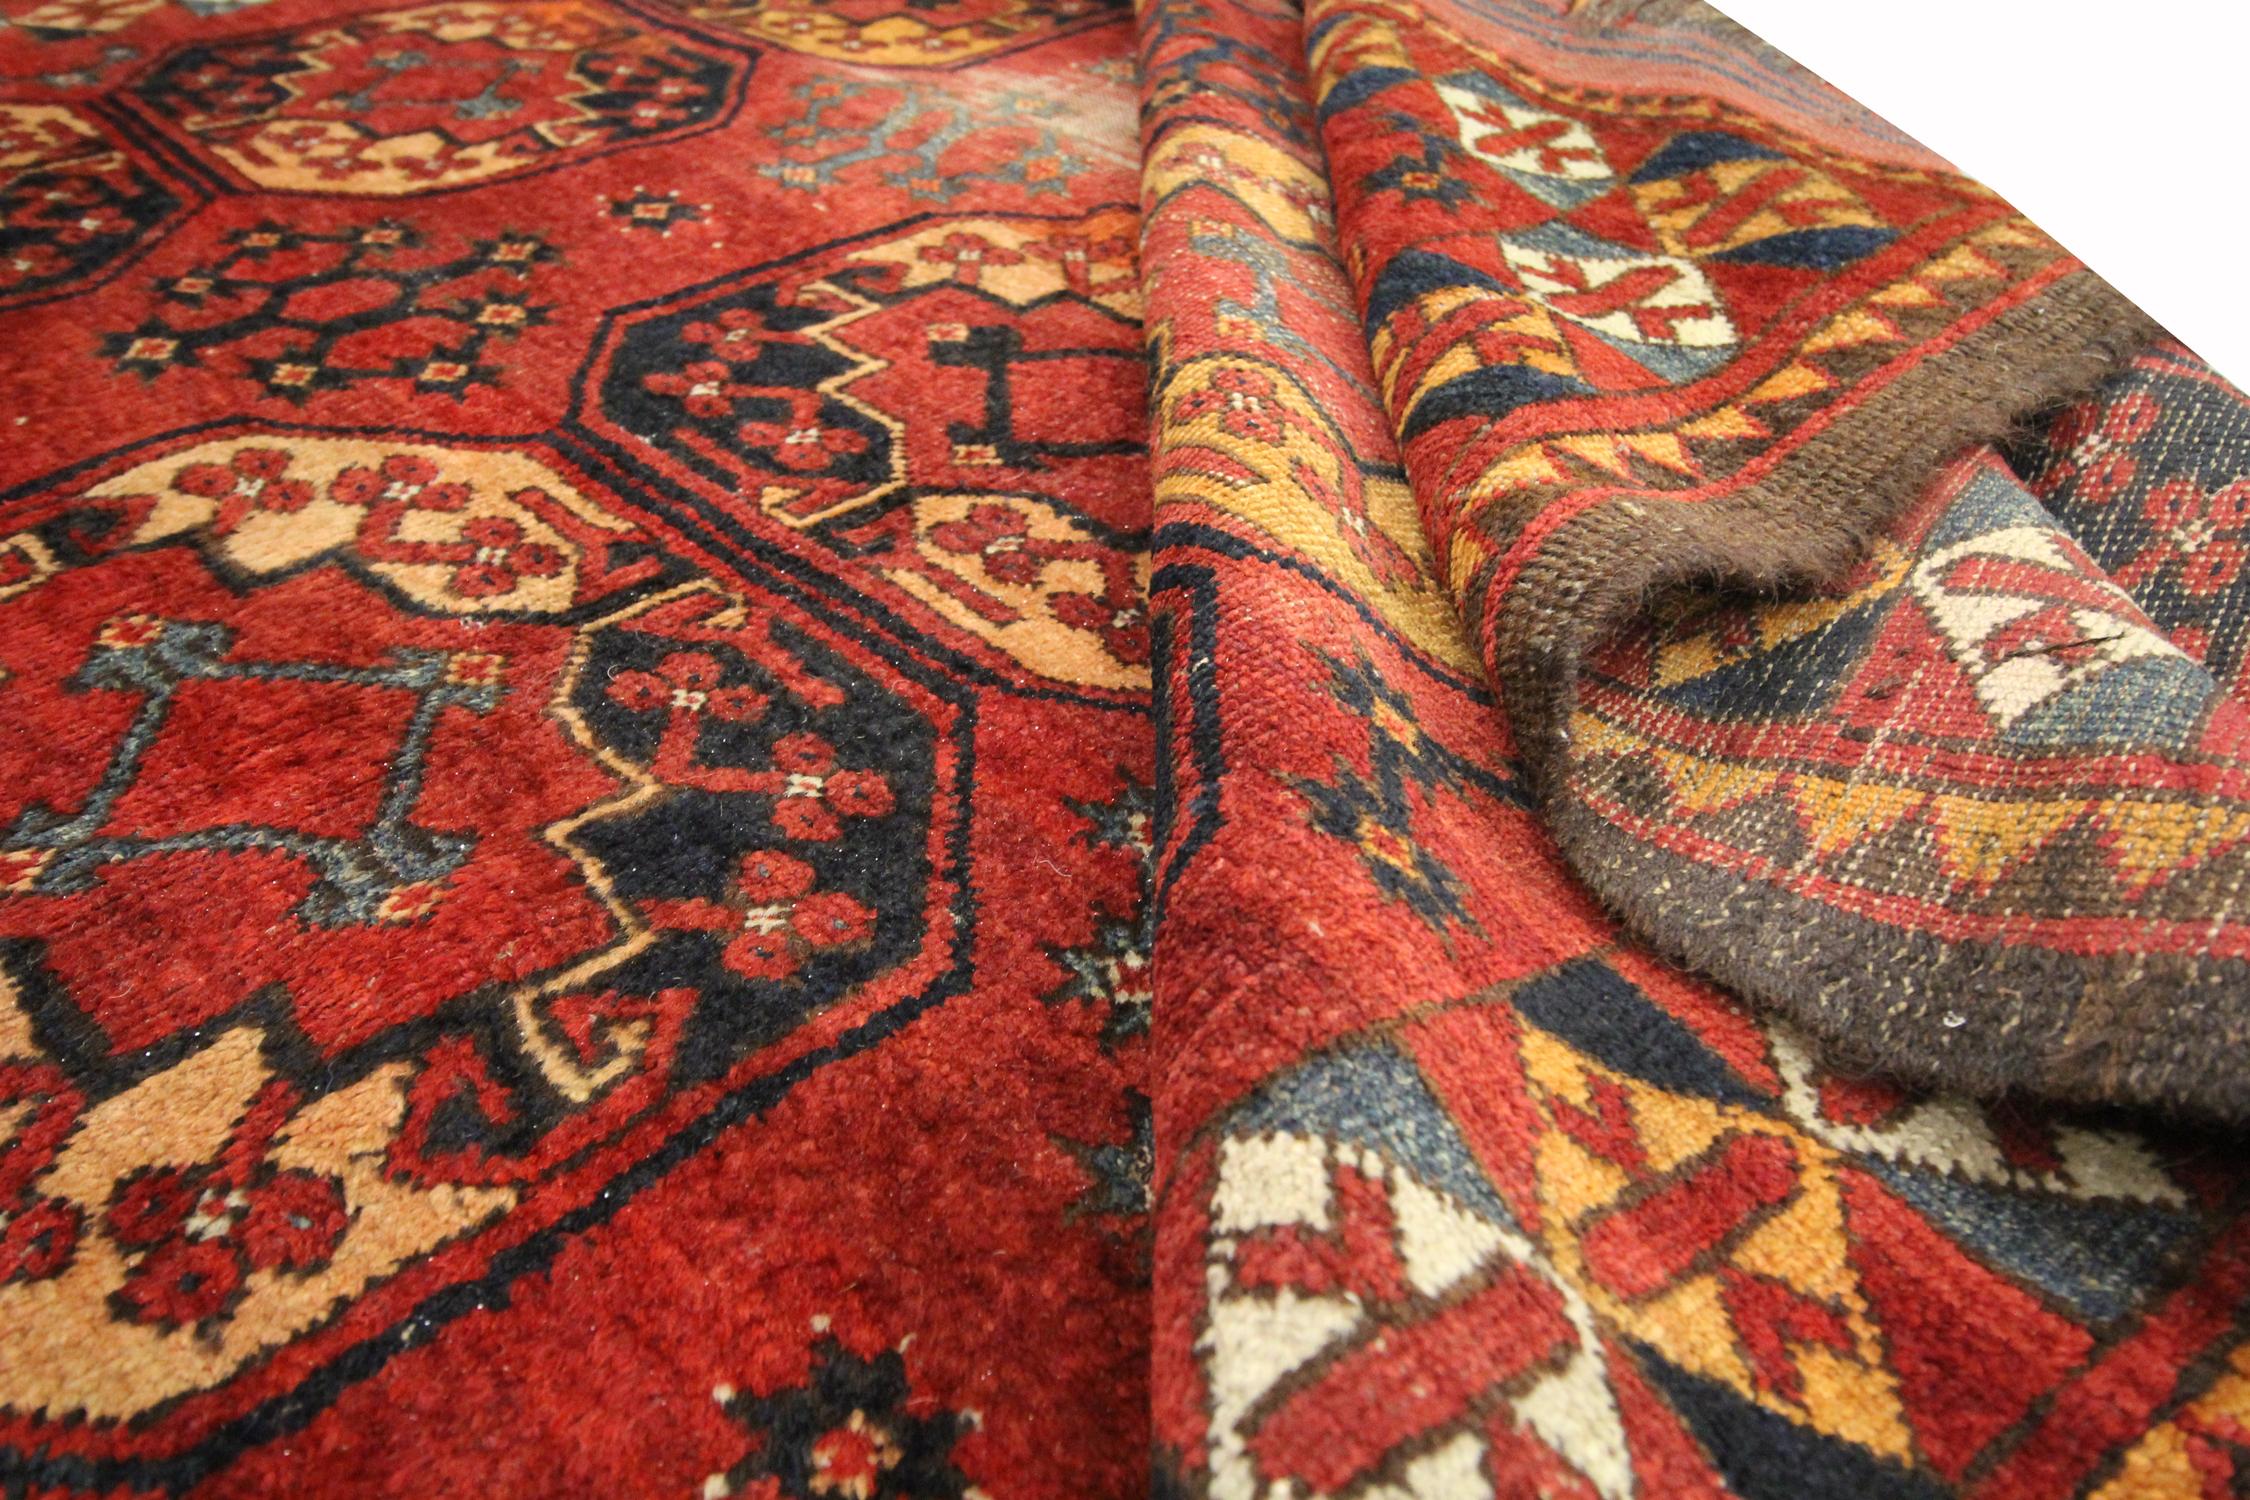 Antique Rugs Turkmen Carpet Area Rug Handwoven Red Orange Wool Rug 4